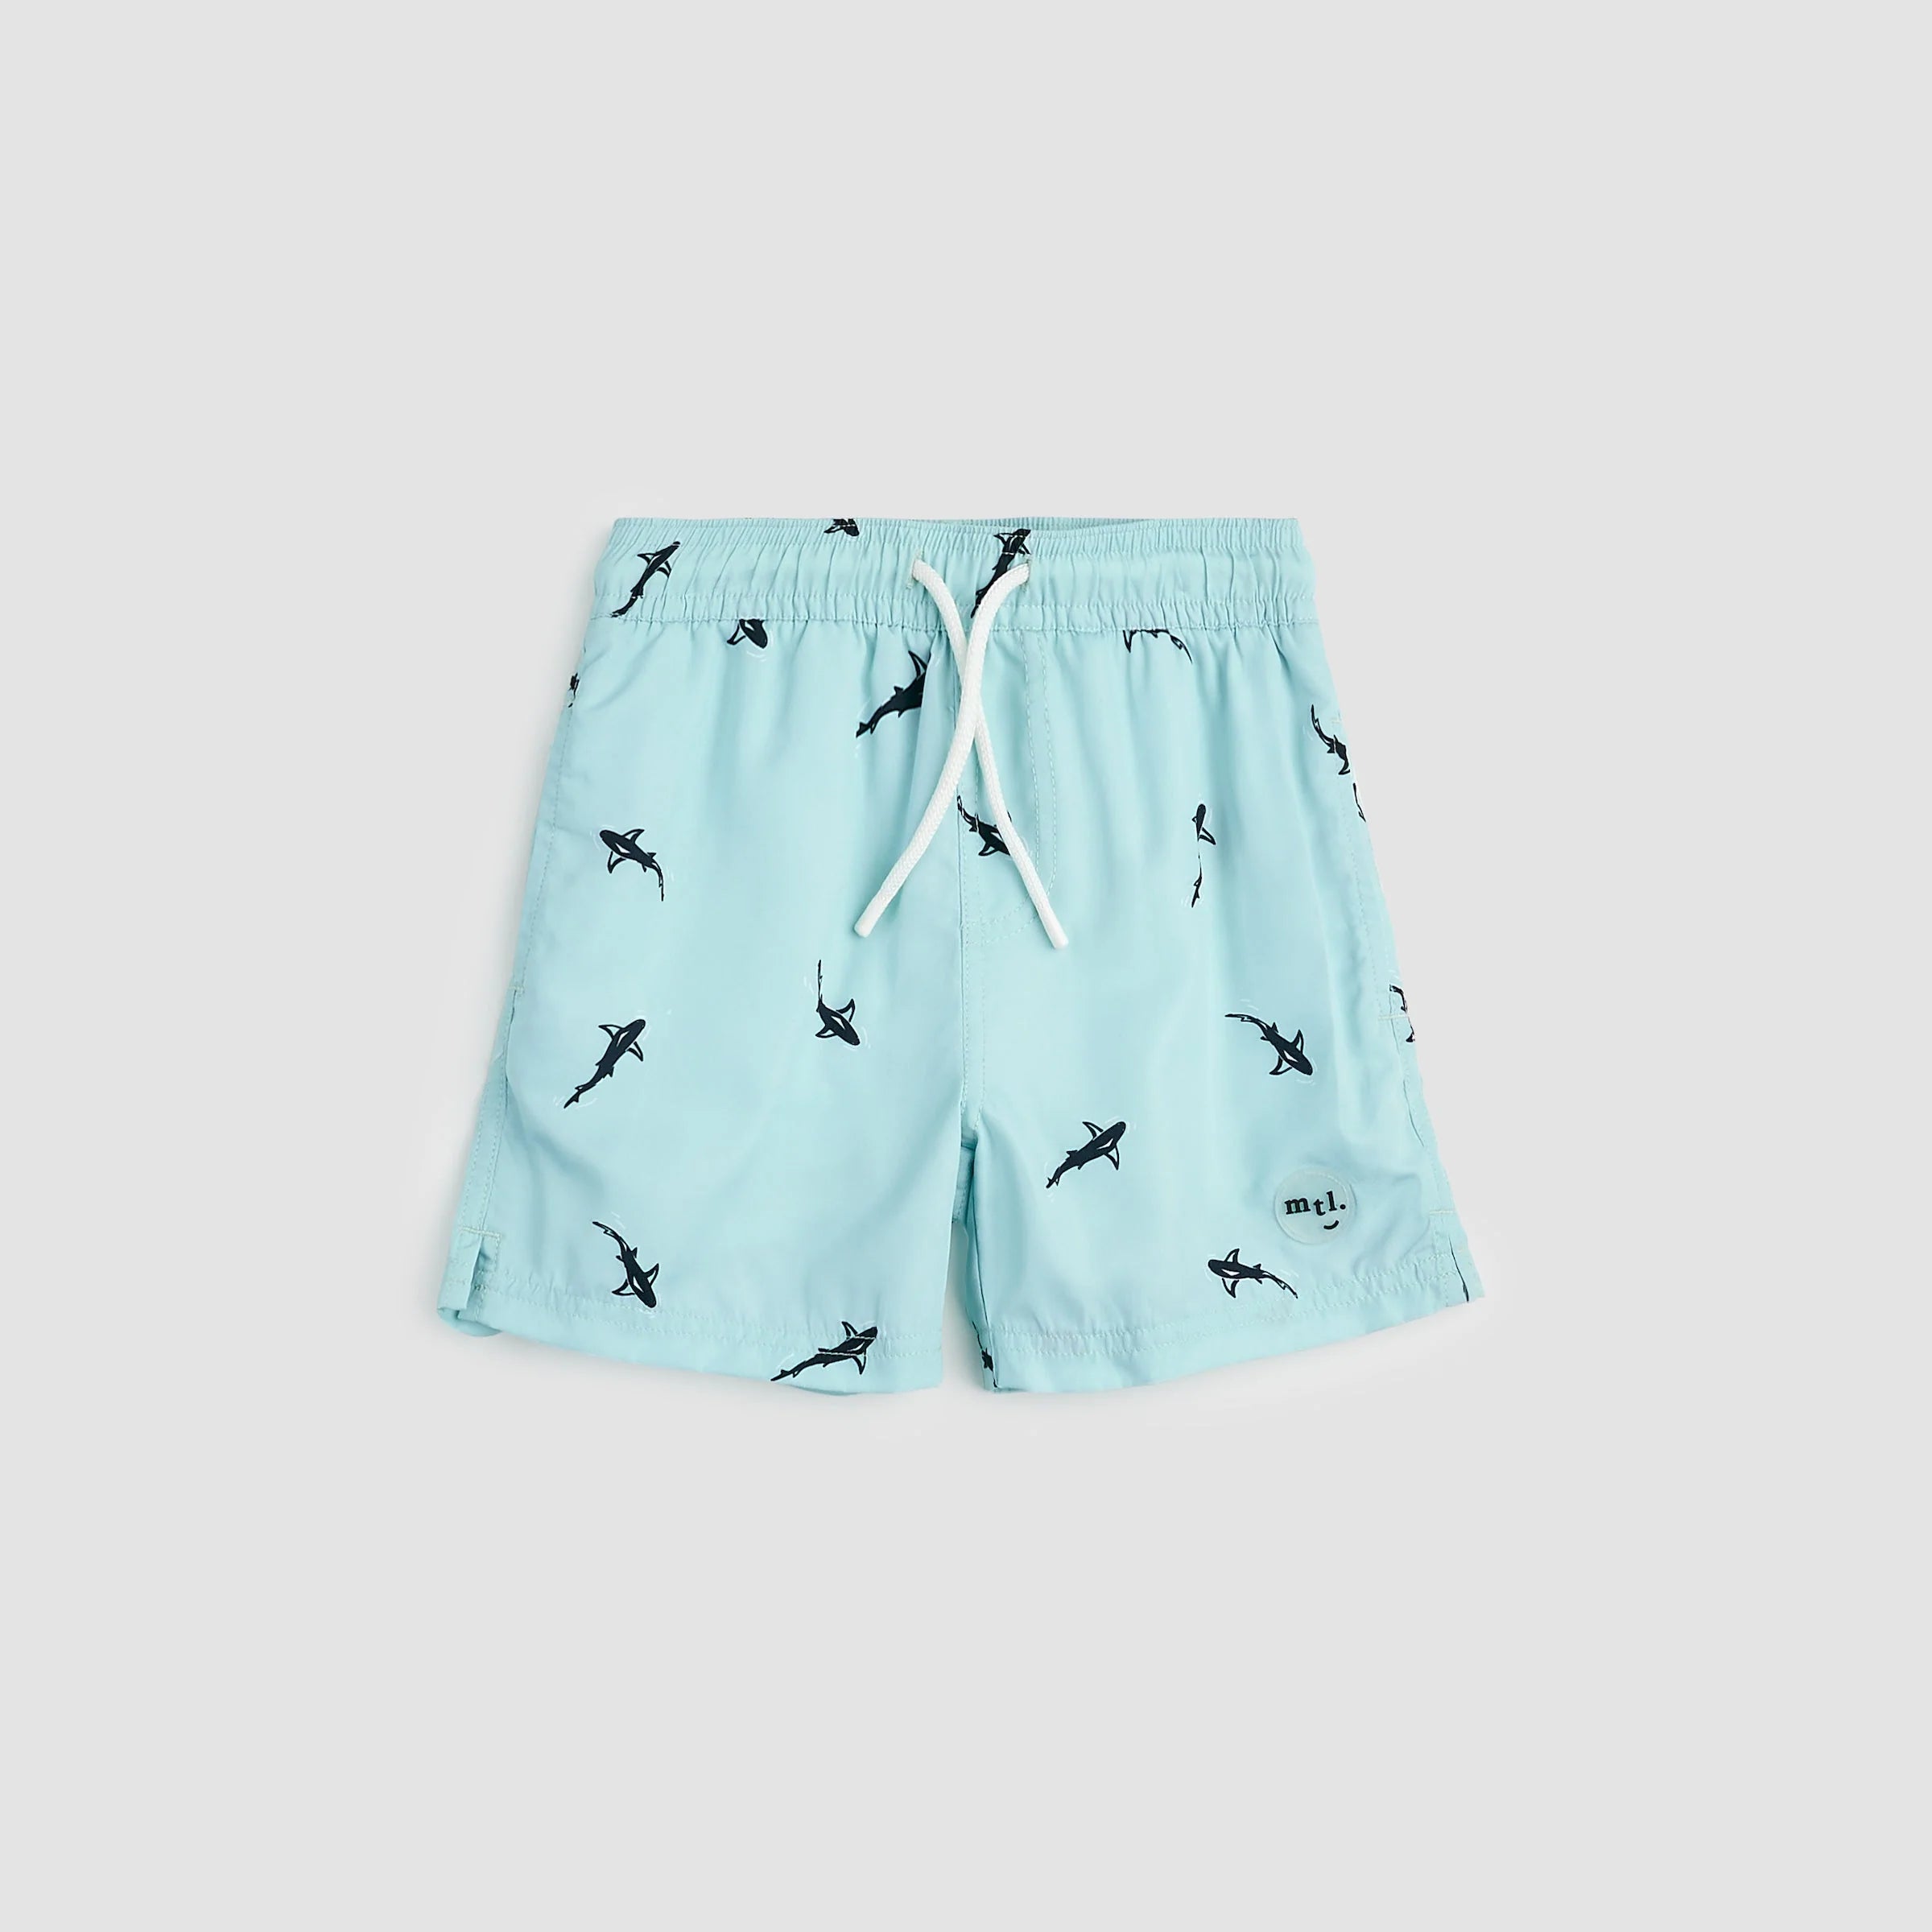 Miles The Label - Sharks Bathing Shorts